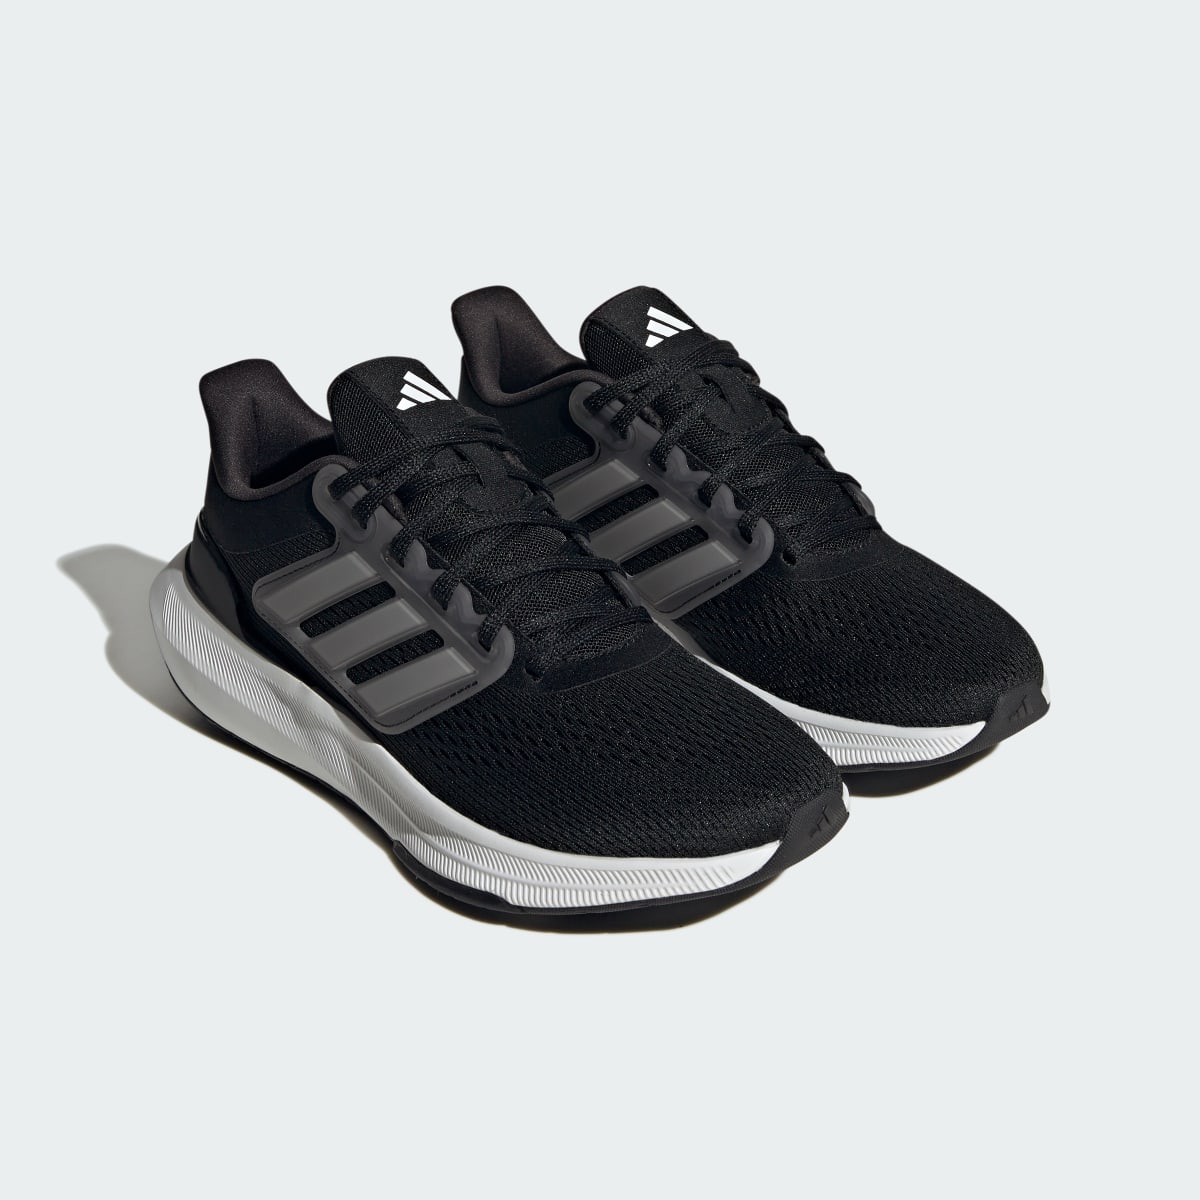 Adidas Ultrabounce Running Shoes. 5